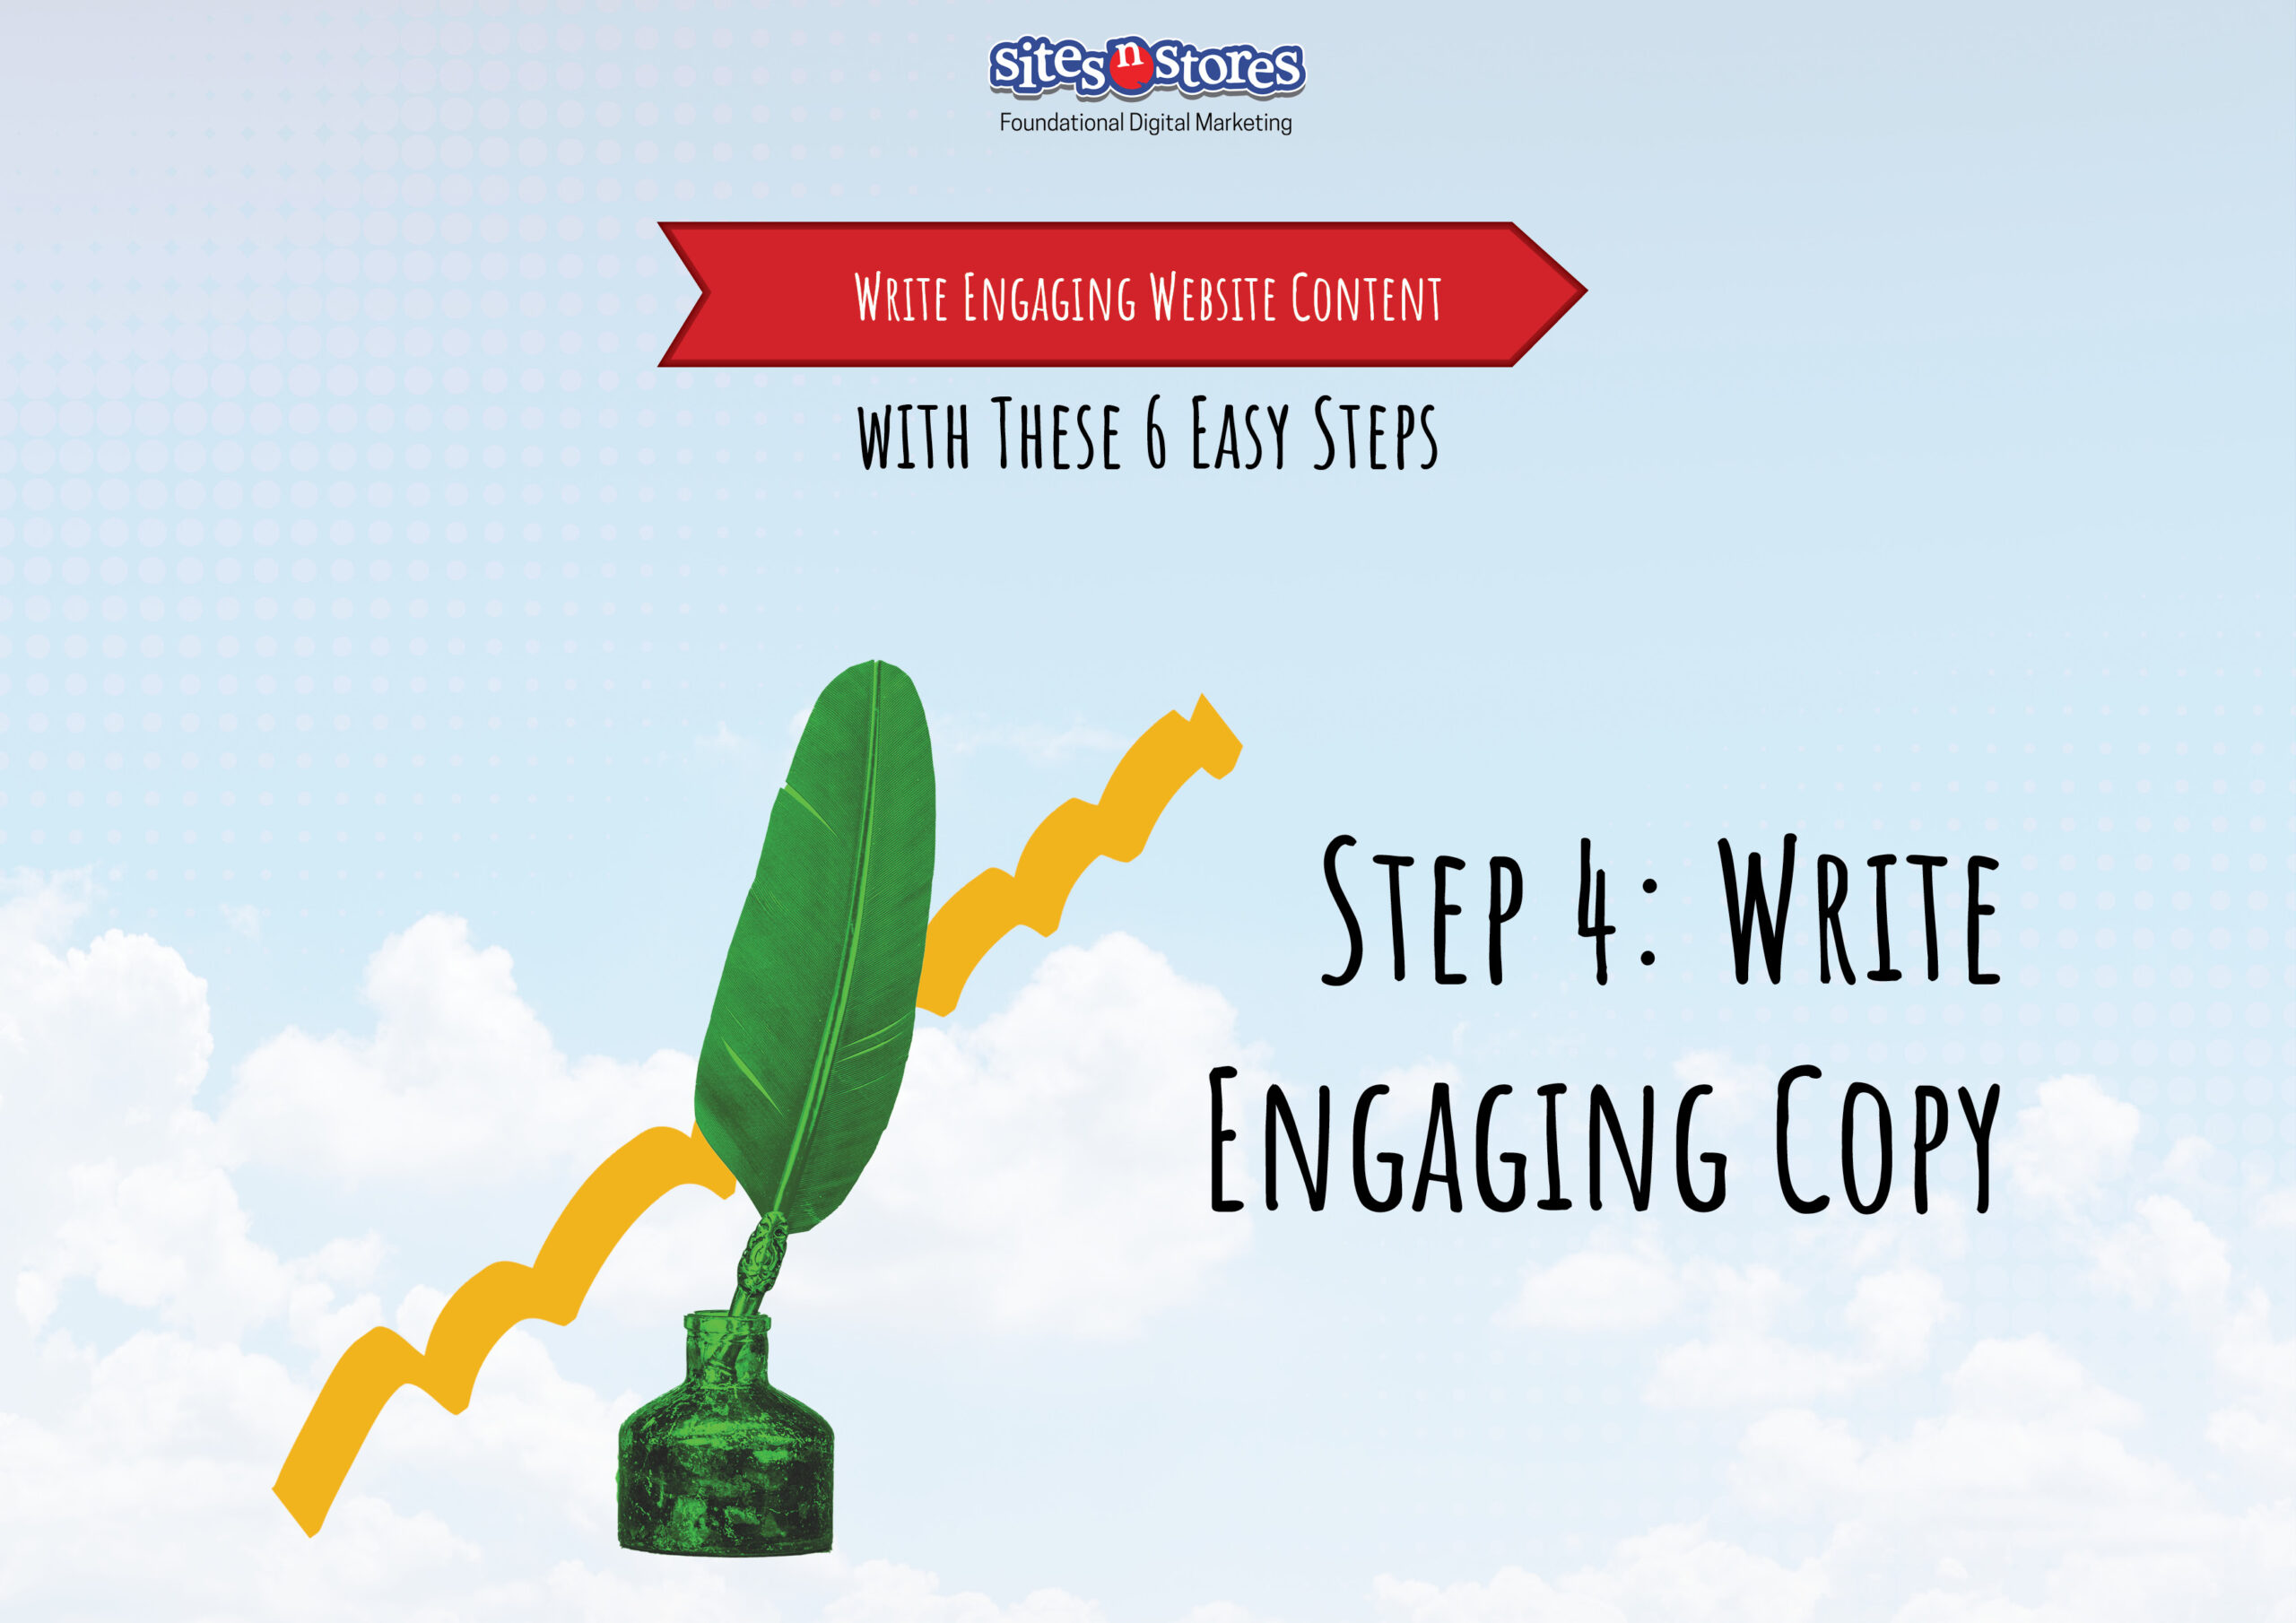 Step 4: Write Engaging Copy